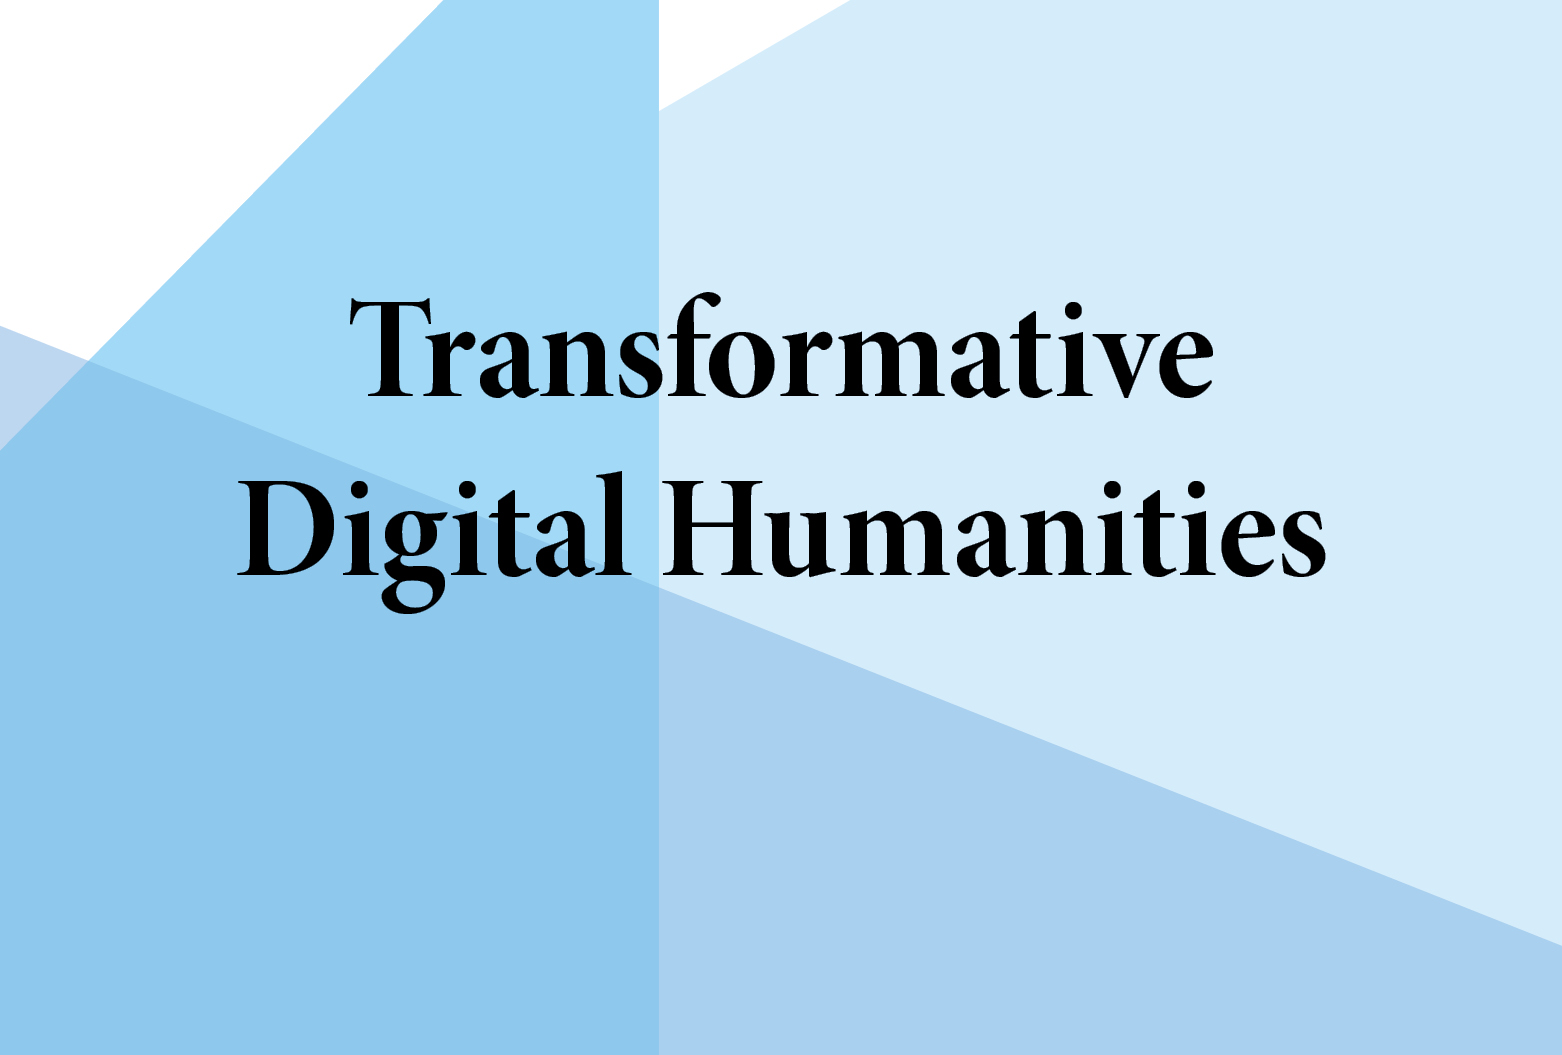 Transformative Digital Humanities: March 23